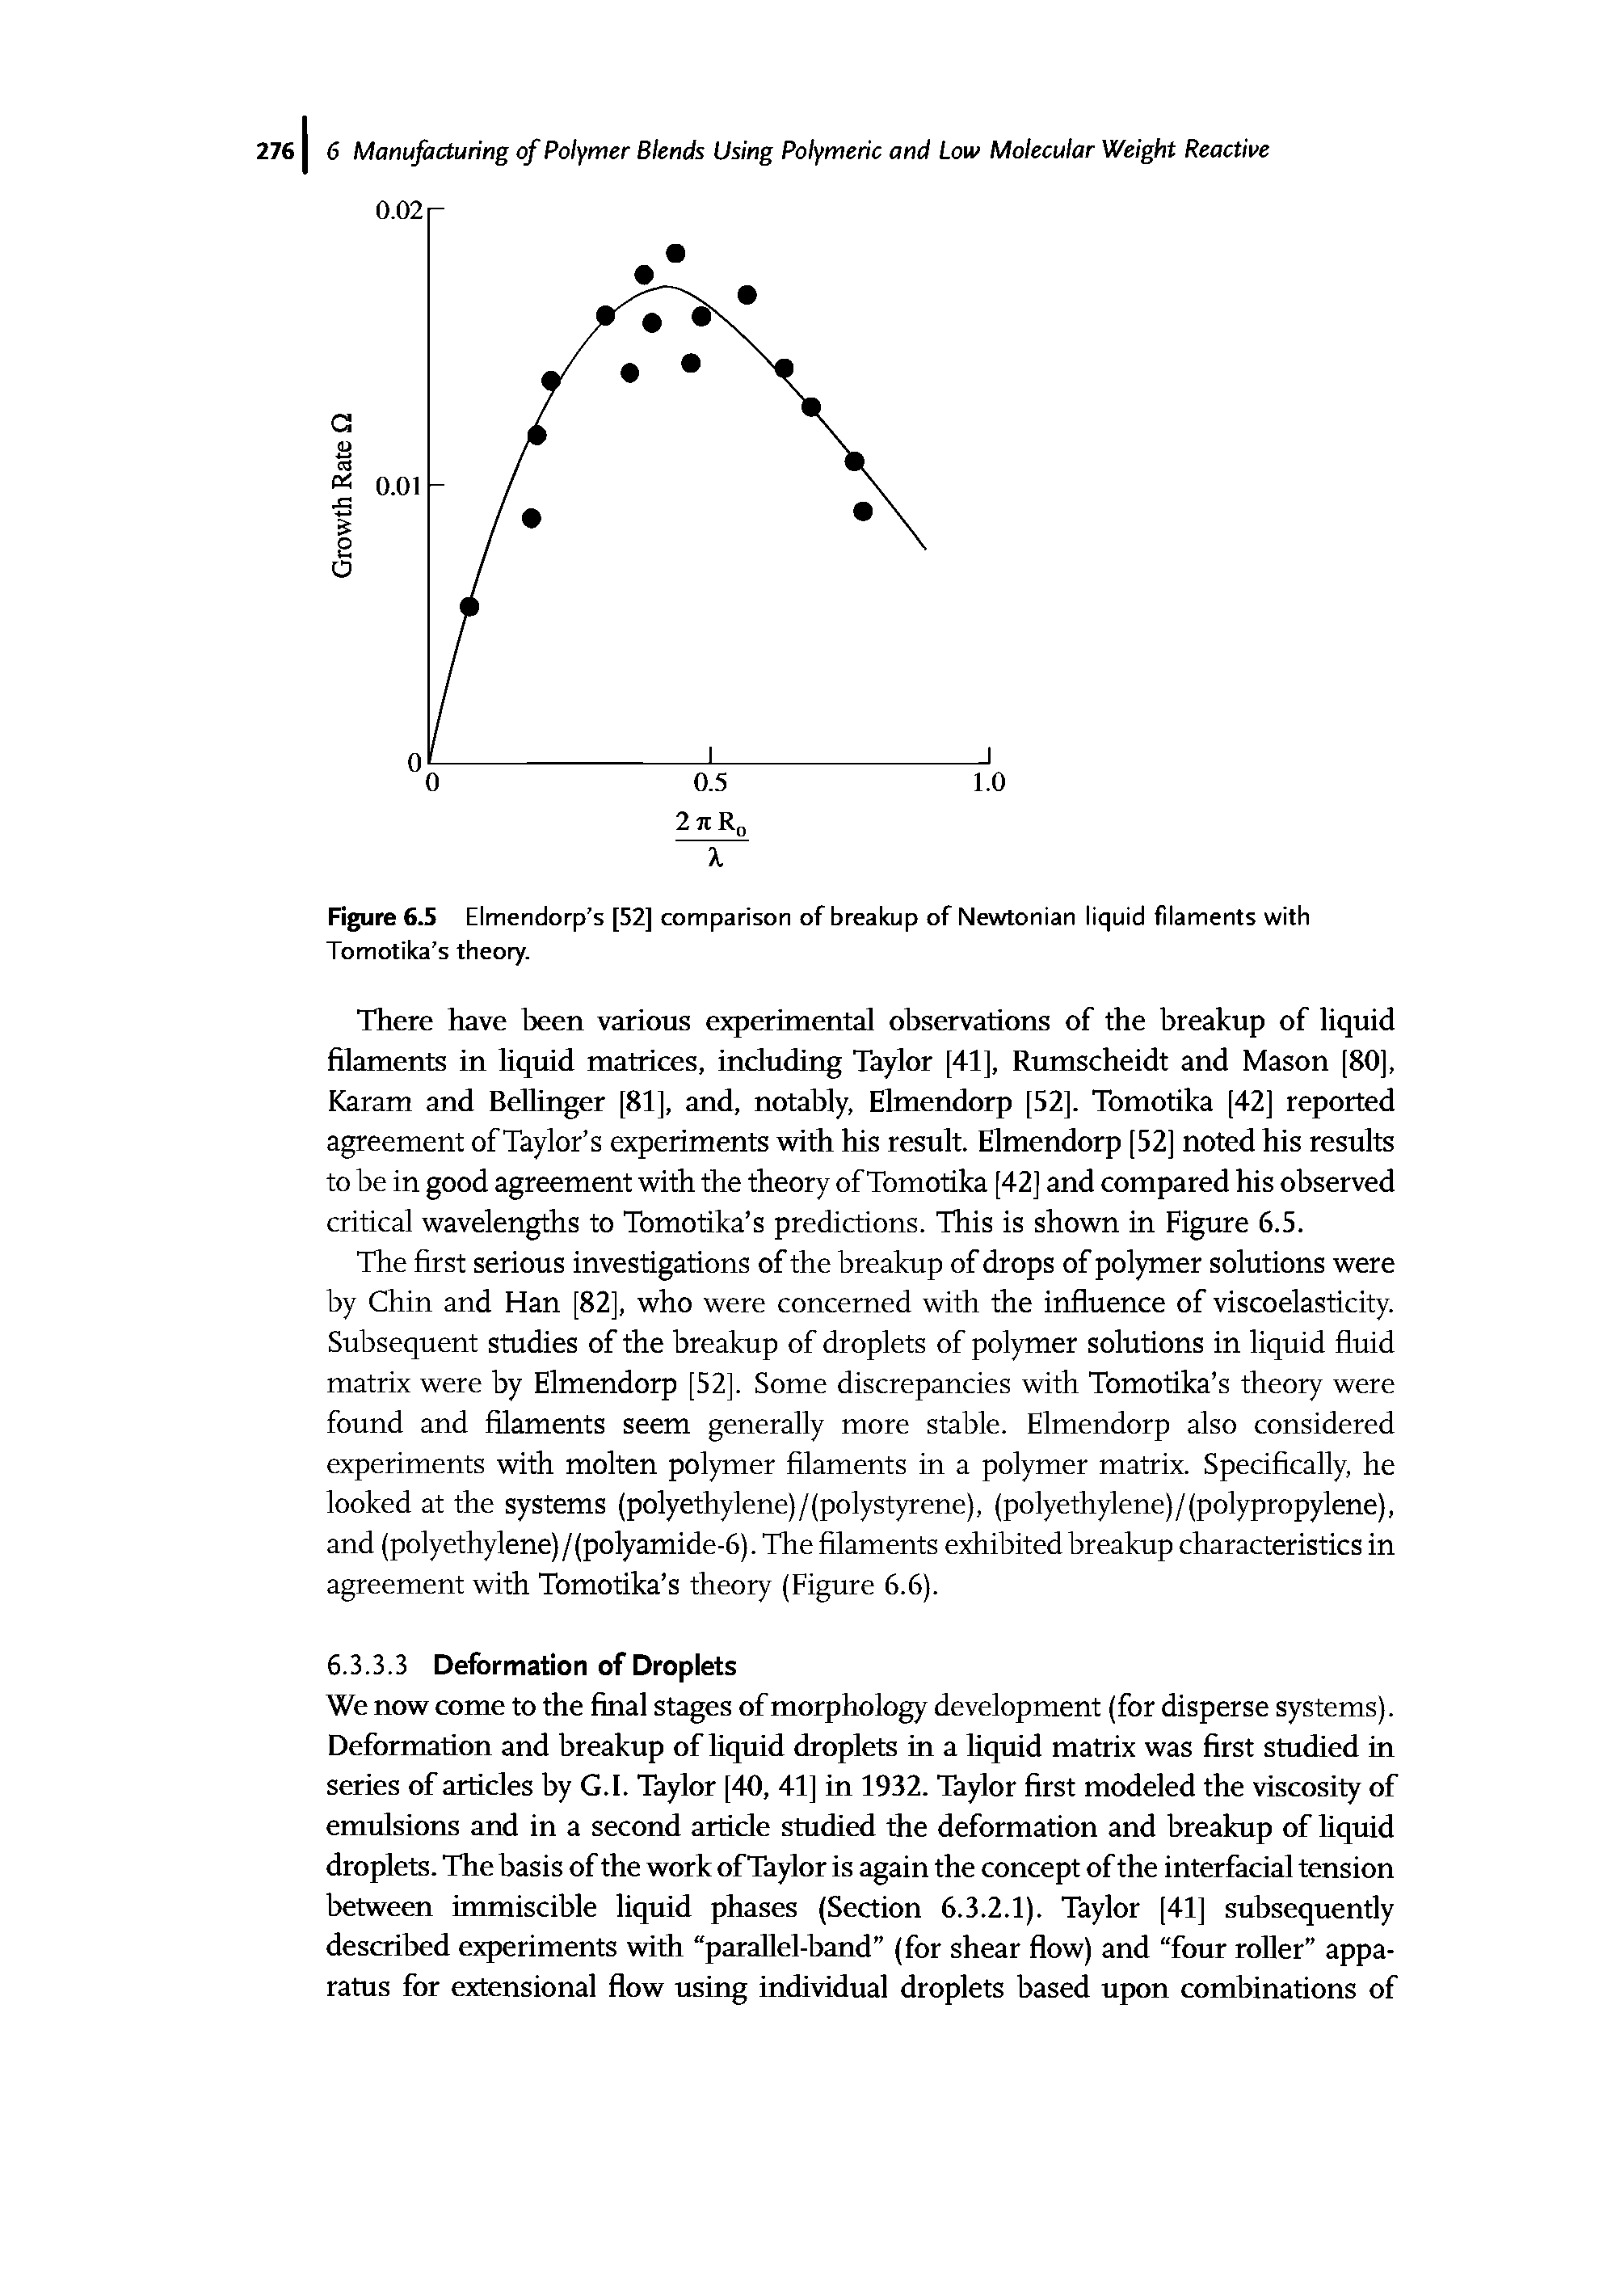 Figure 6.5 Elmendorp s [52] comparison of breakup of Newtonian liquid filaments with Tomotika s theory.